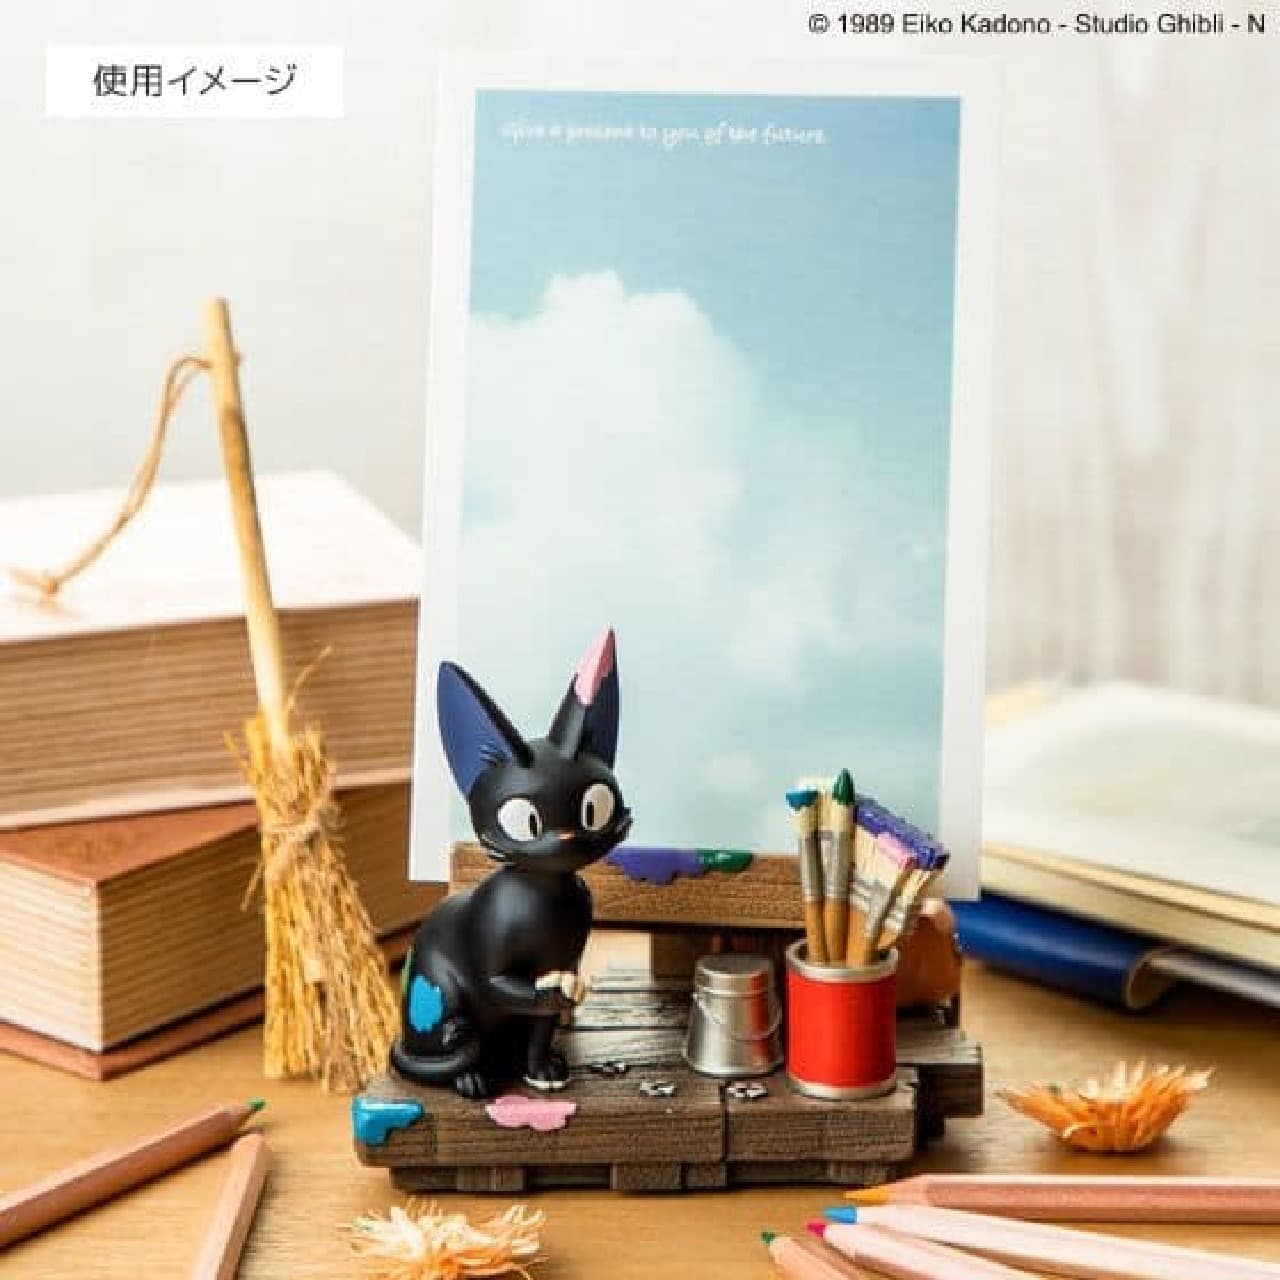 Donguri Republic "Diorama Stand with Calendar" filled with Ghibli